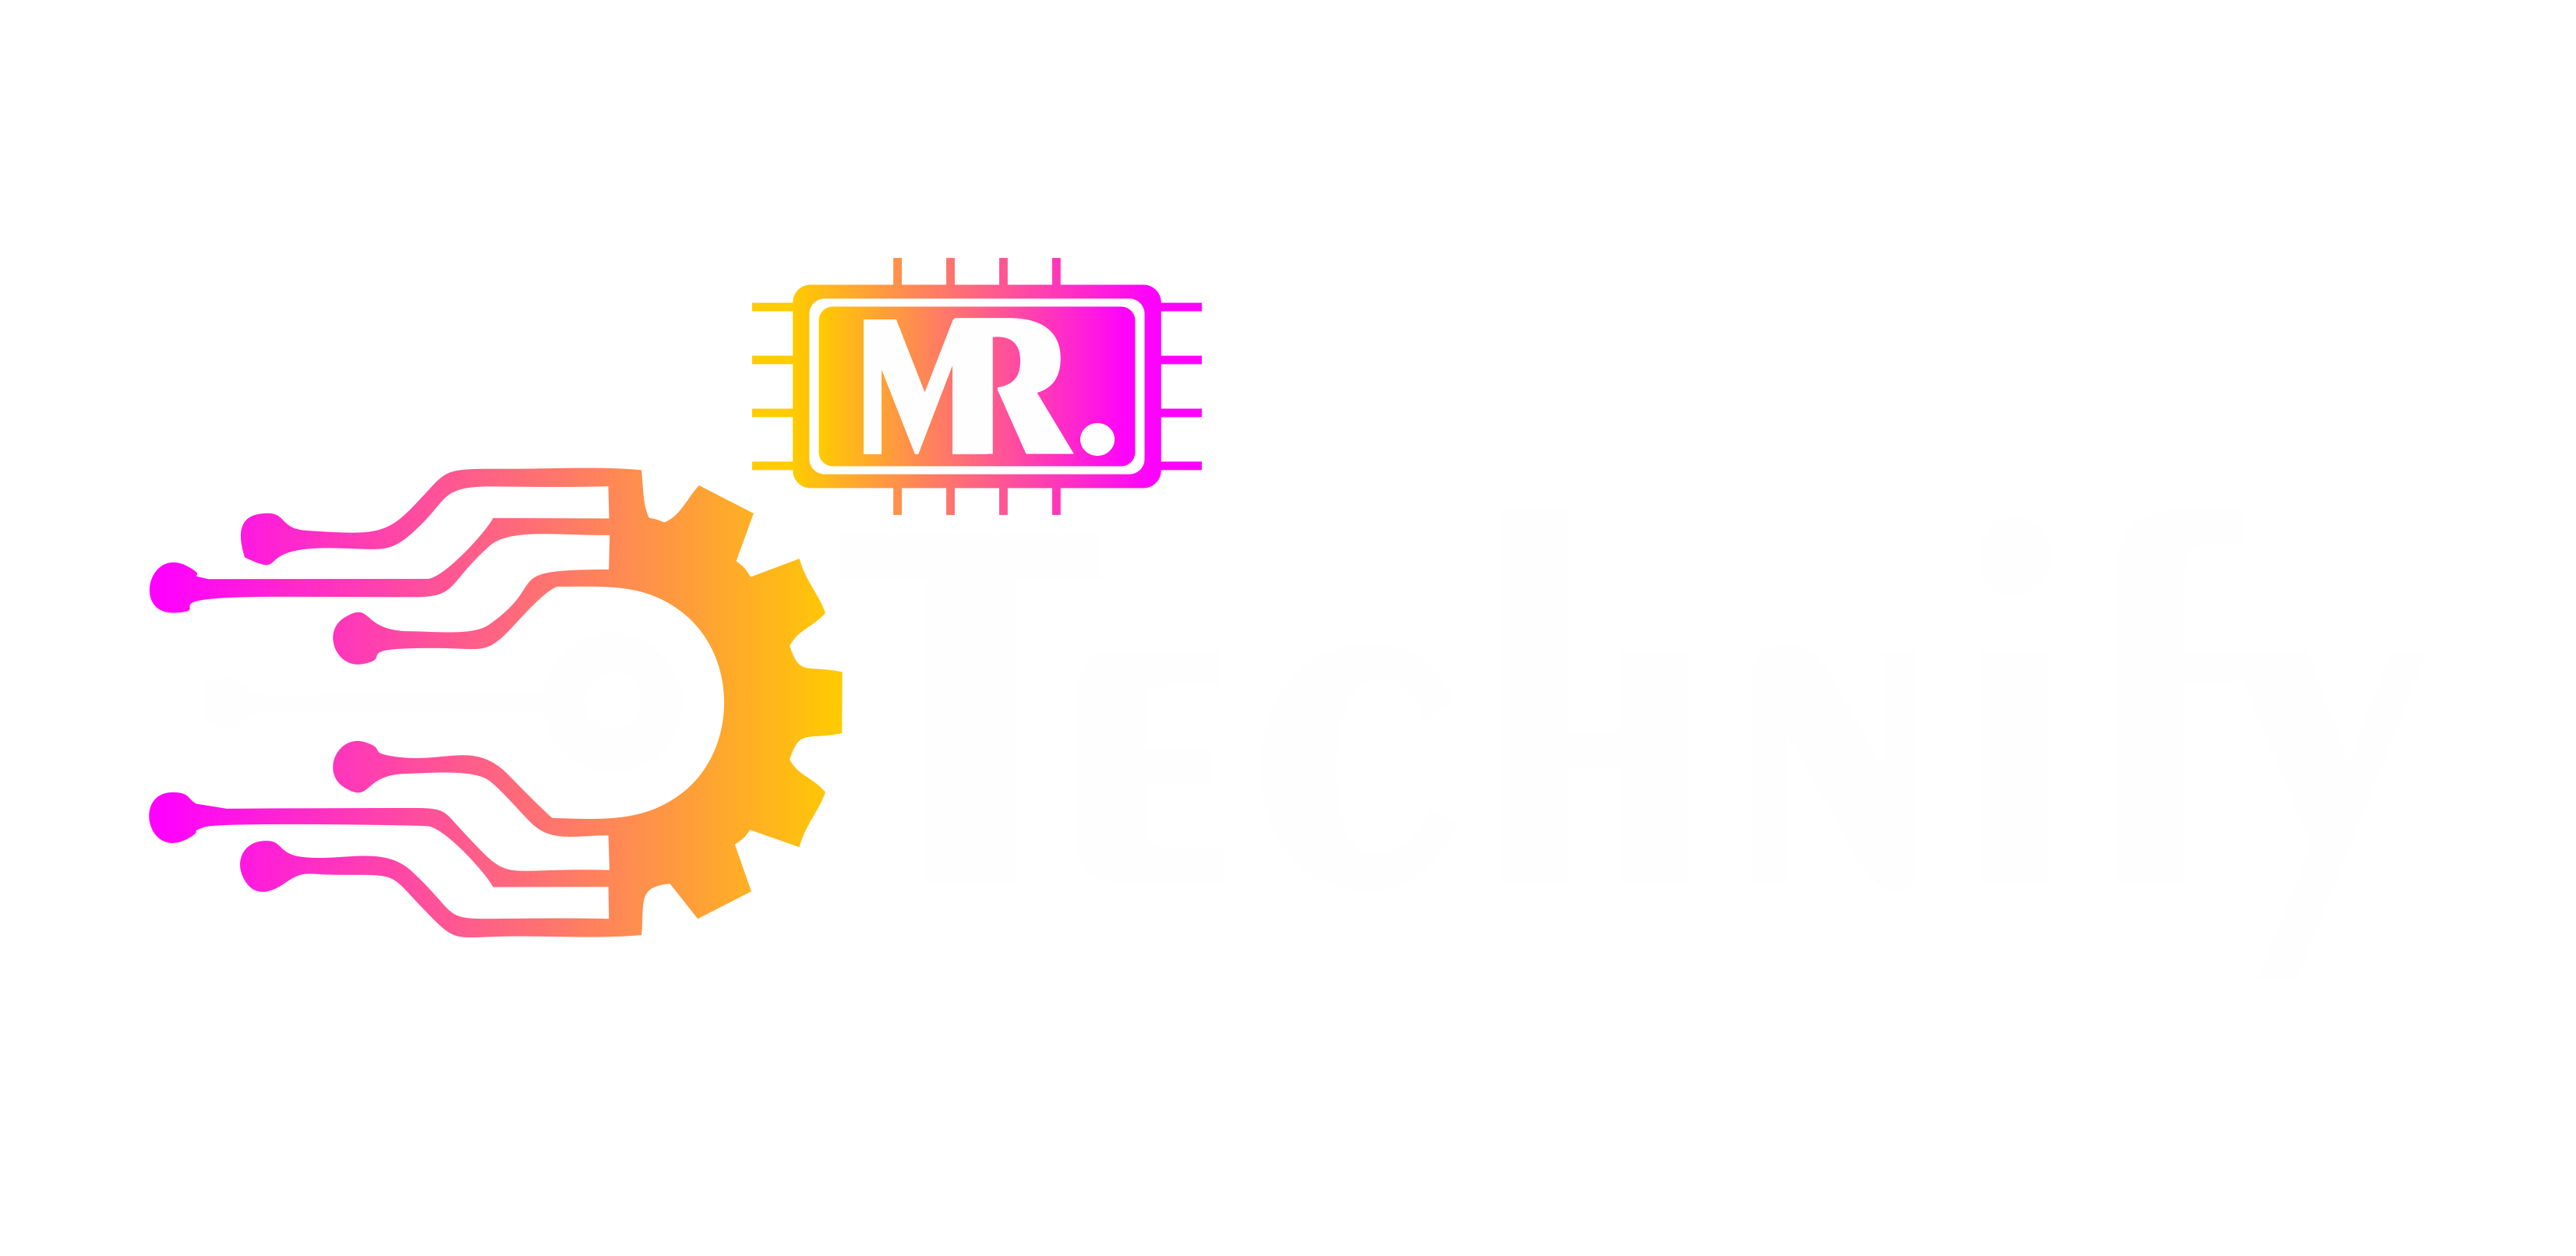 Mr. Technify